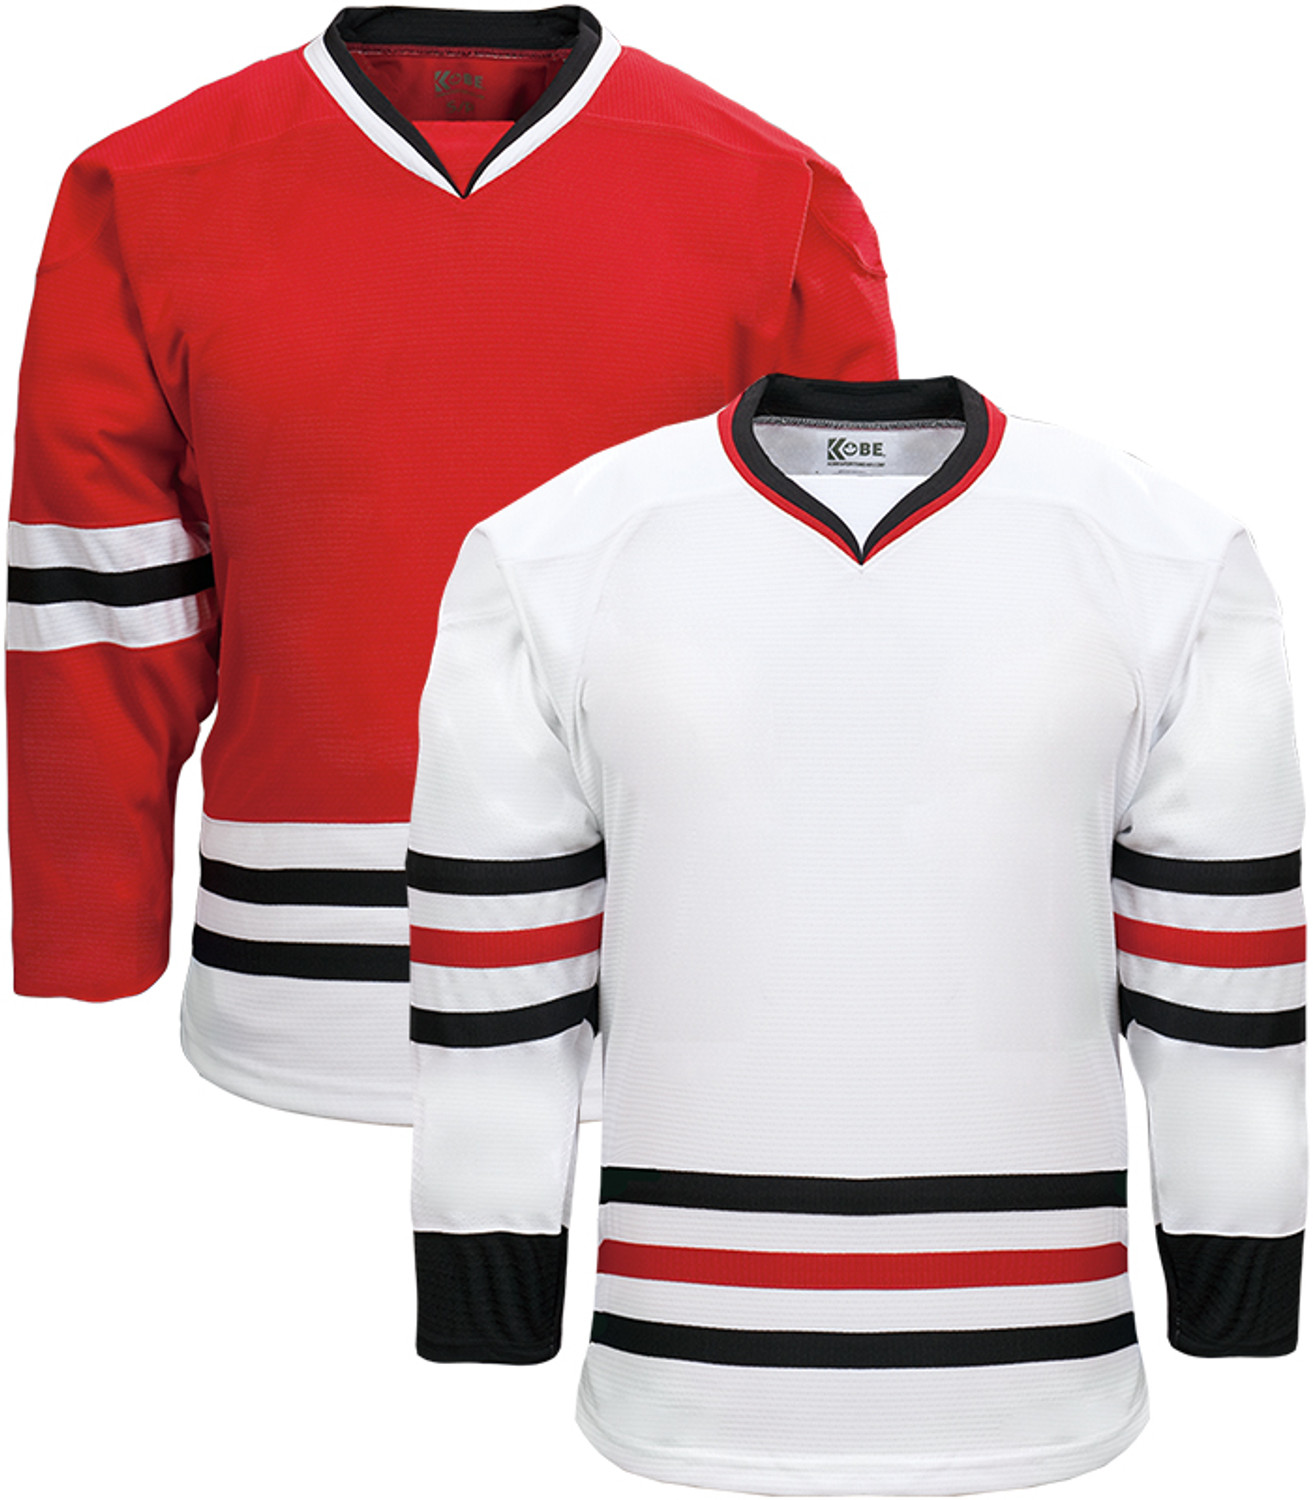 Kobe XJ5 House League Hockey Jersey - Red Black White